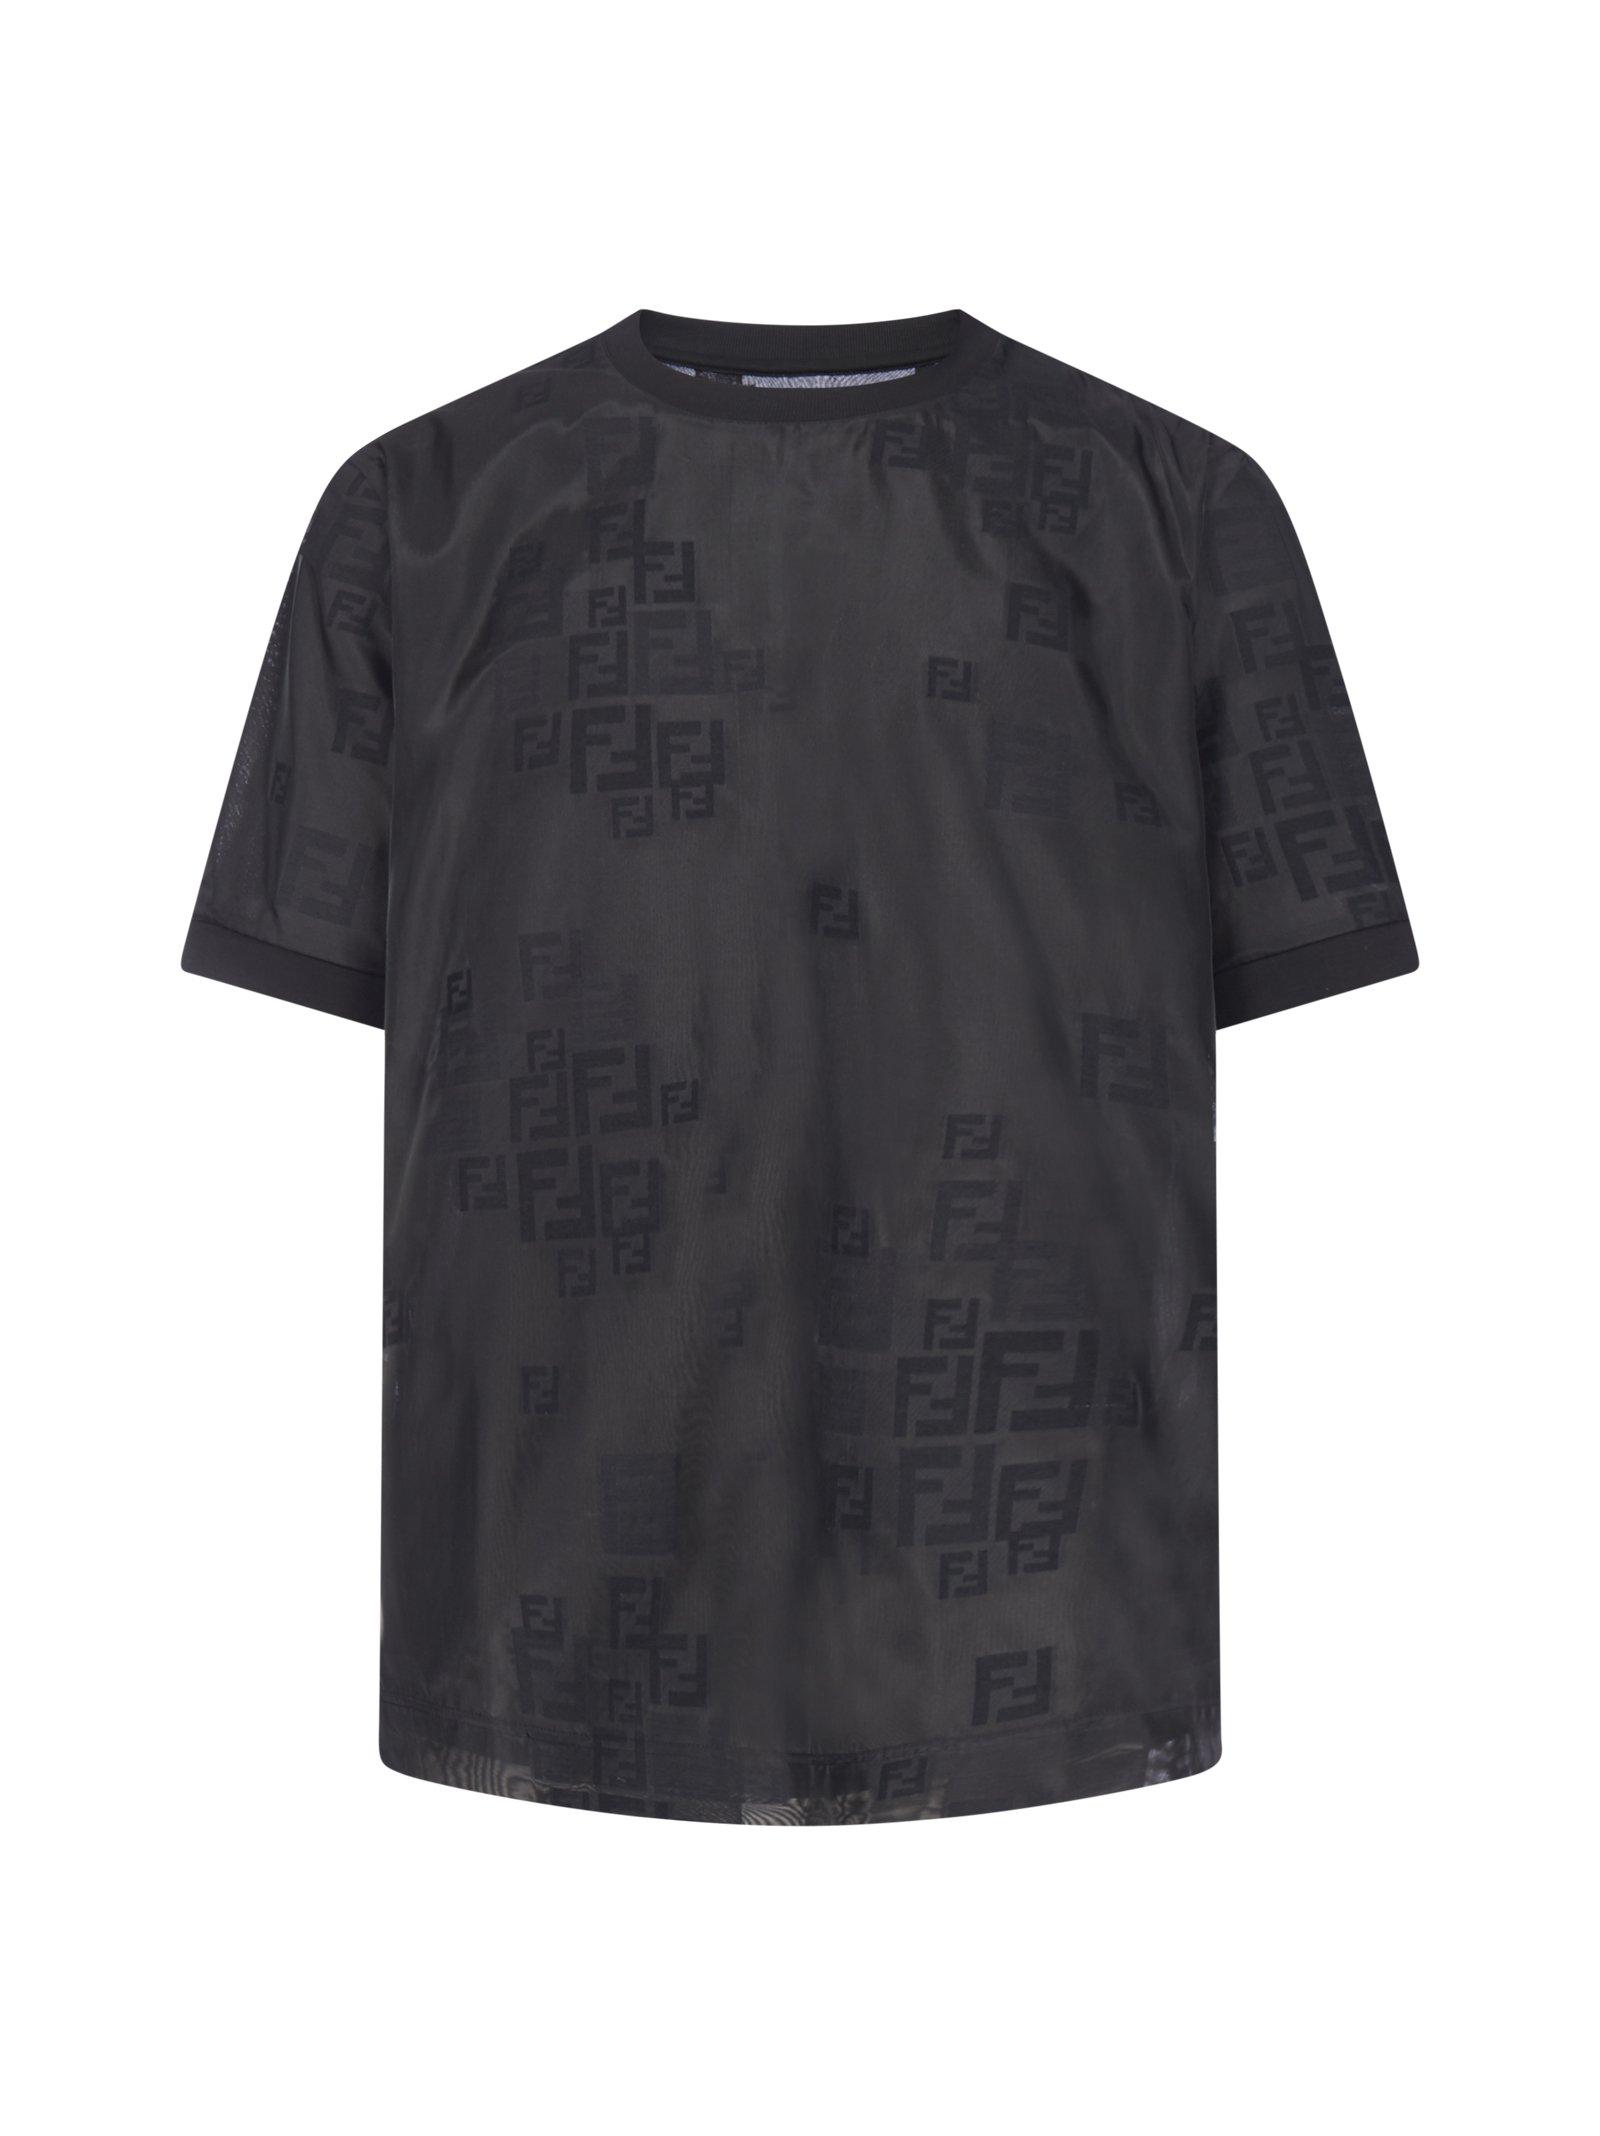 Fendi Synthetic Ff Motif T-shirt in Black for Men - Lyst